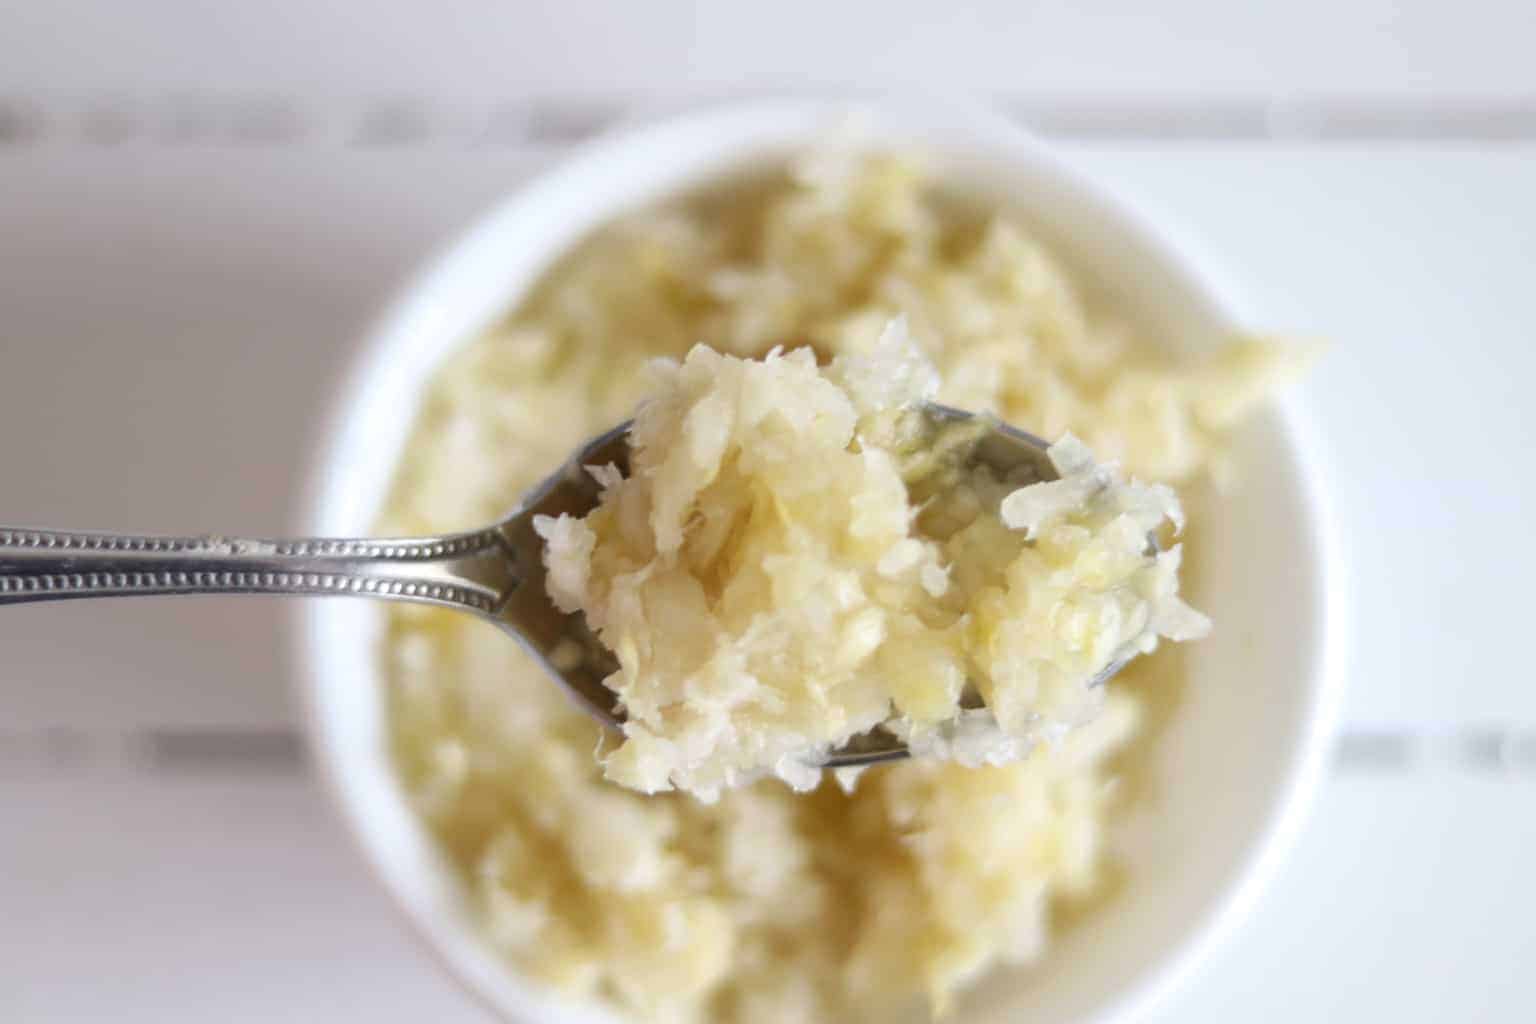 Spoon full of sauerkraut with bowl of sauerkraut in background.